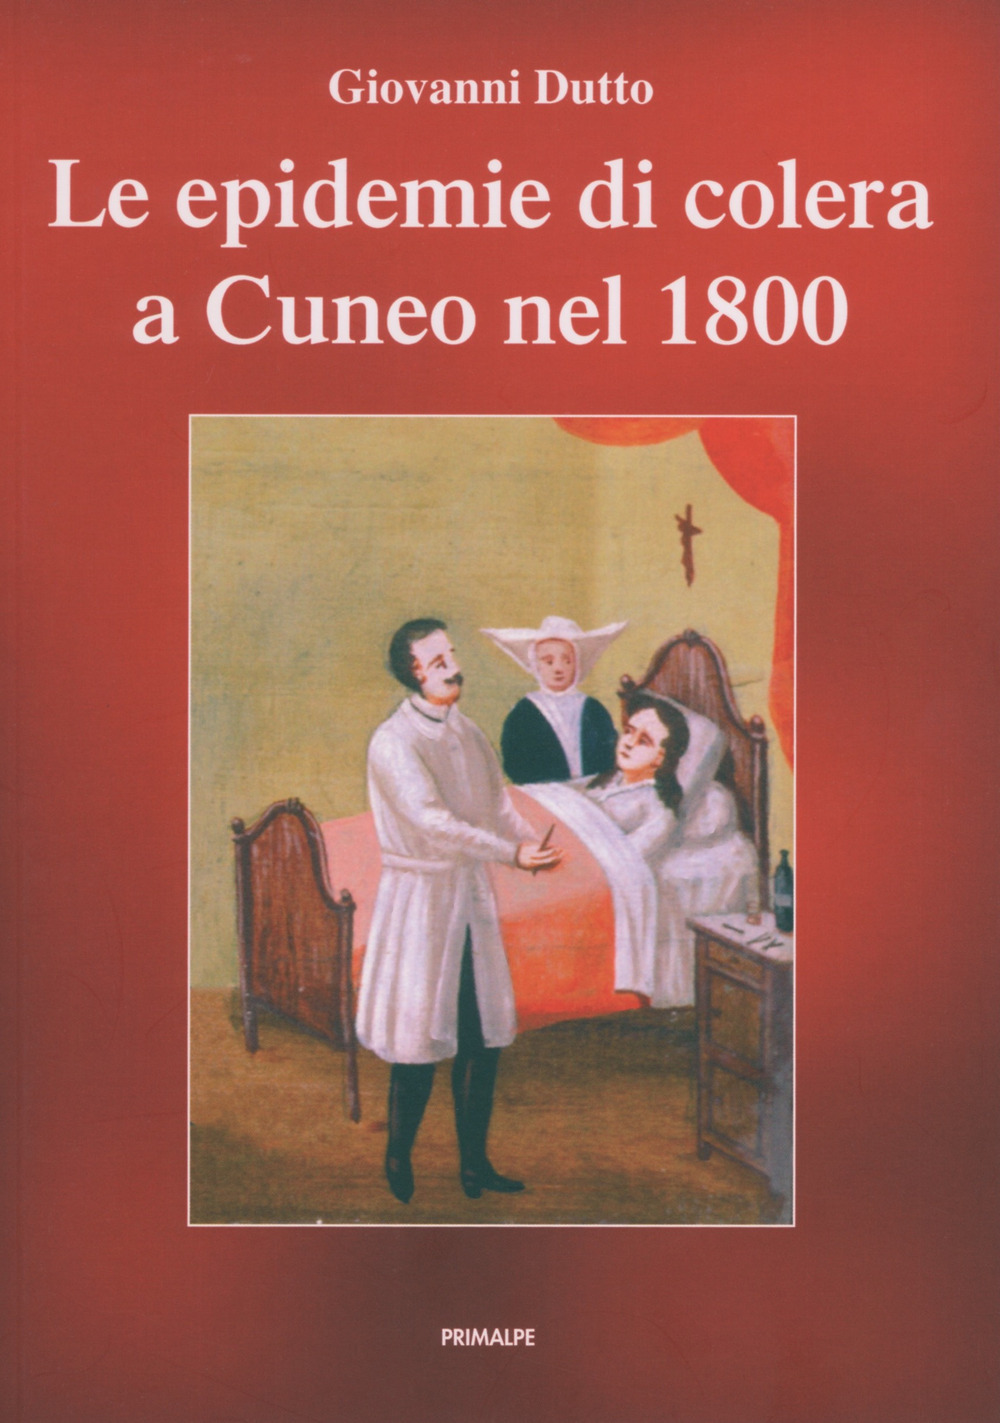 Le epidemie di colera a Cuneo nel 1800